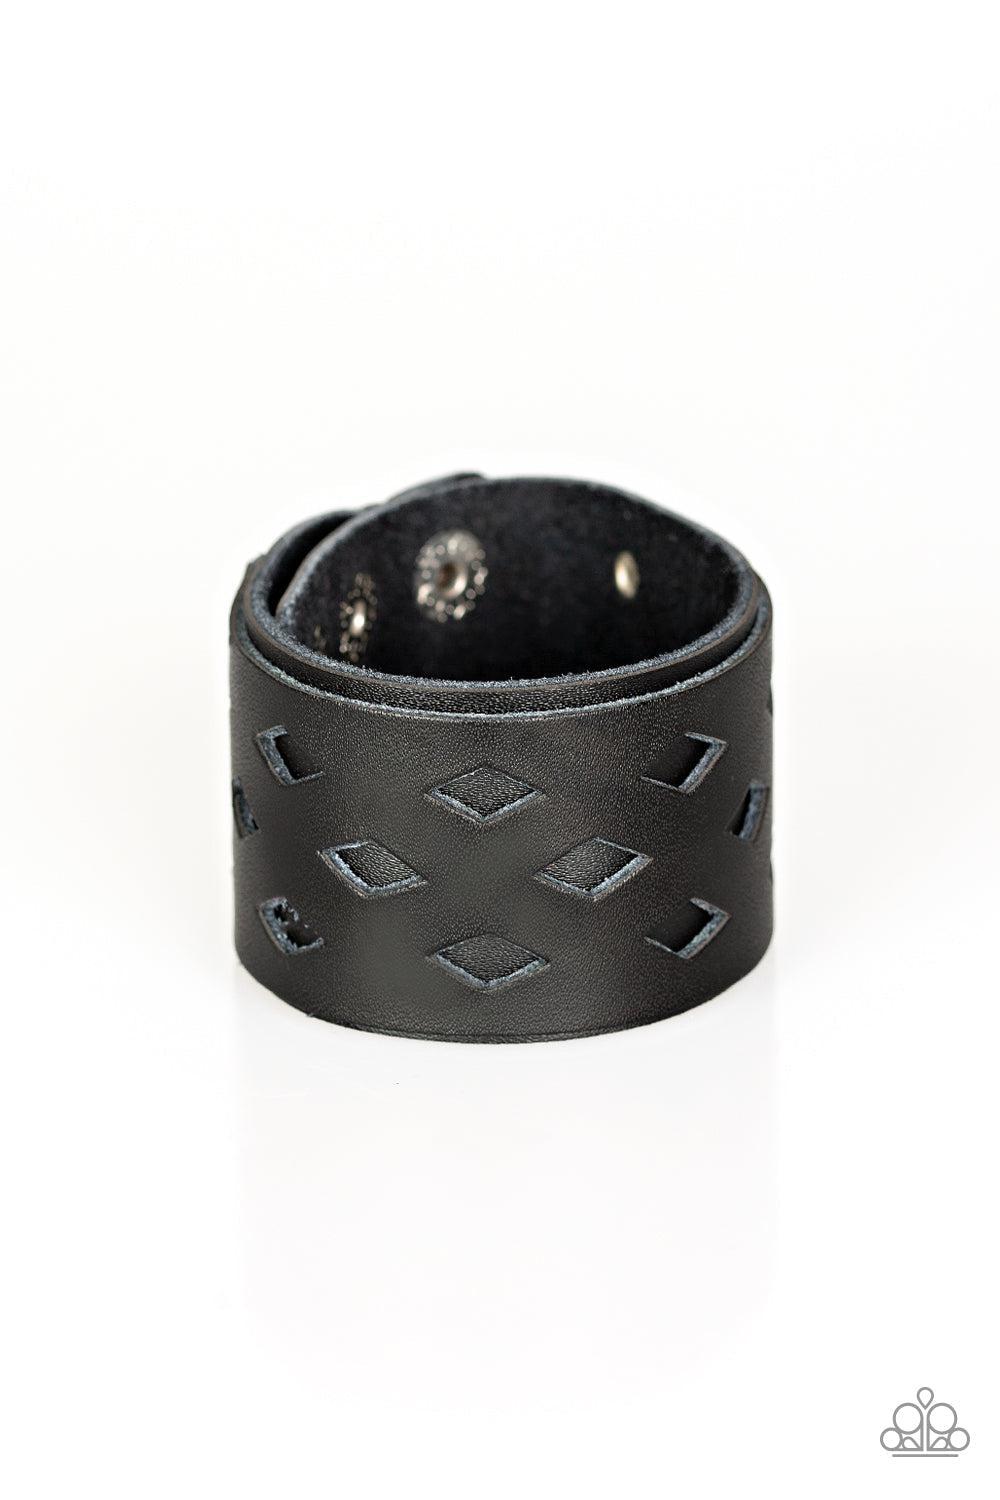 Bucking Bronco Black Bracelet - Paparazzi Accessories- lightbox - CarasShop.com - $5 Jewelry by Cara Jewels